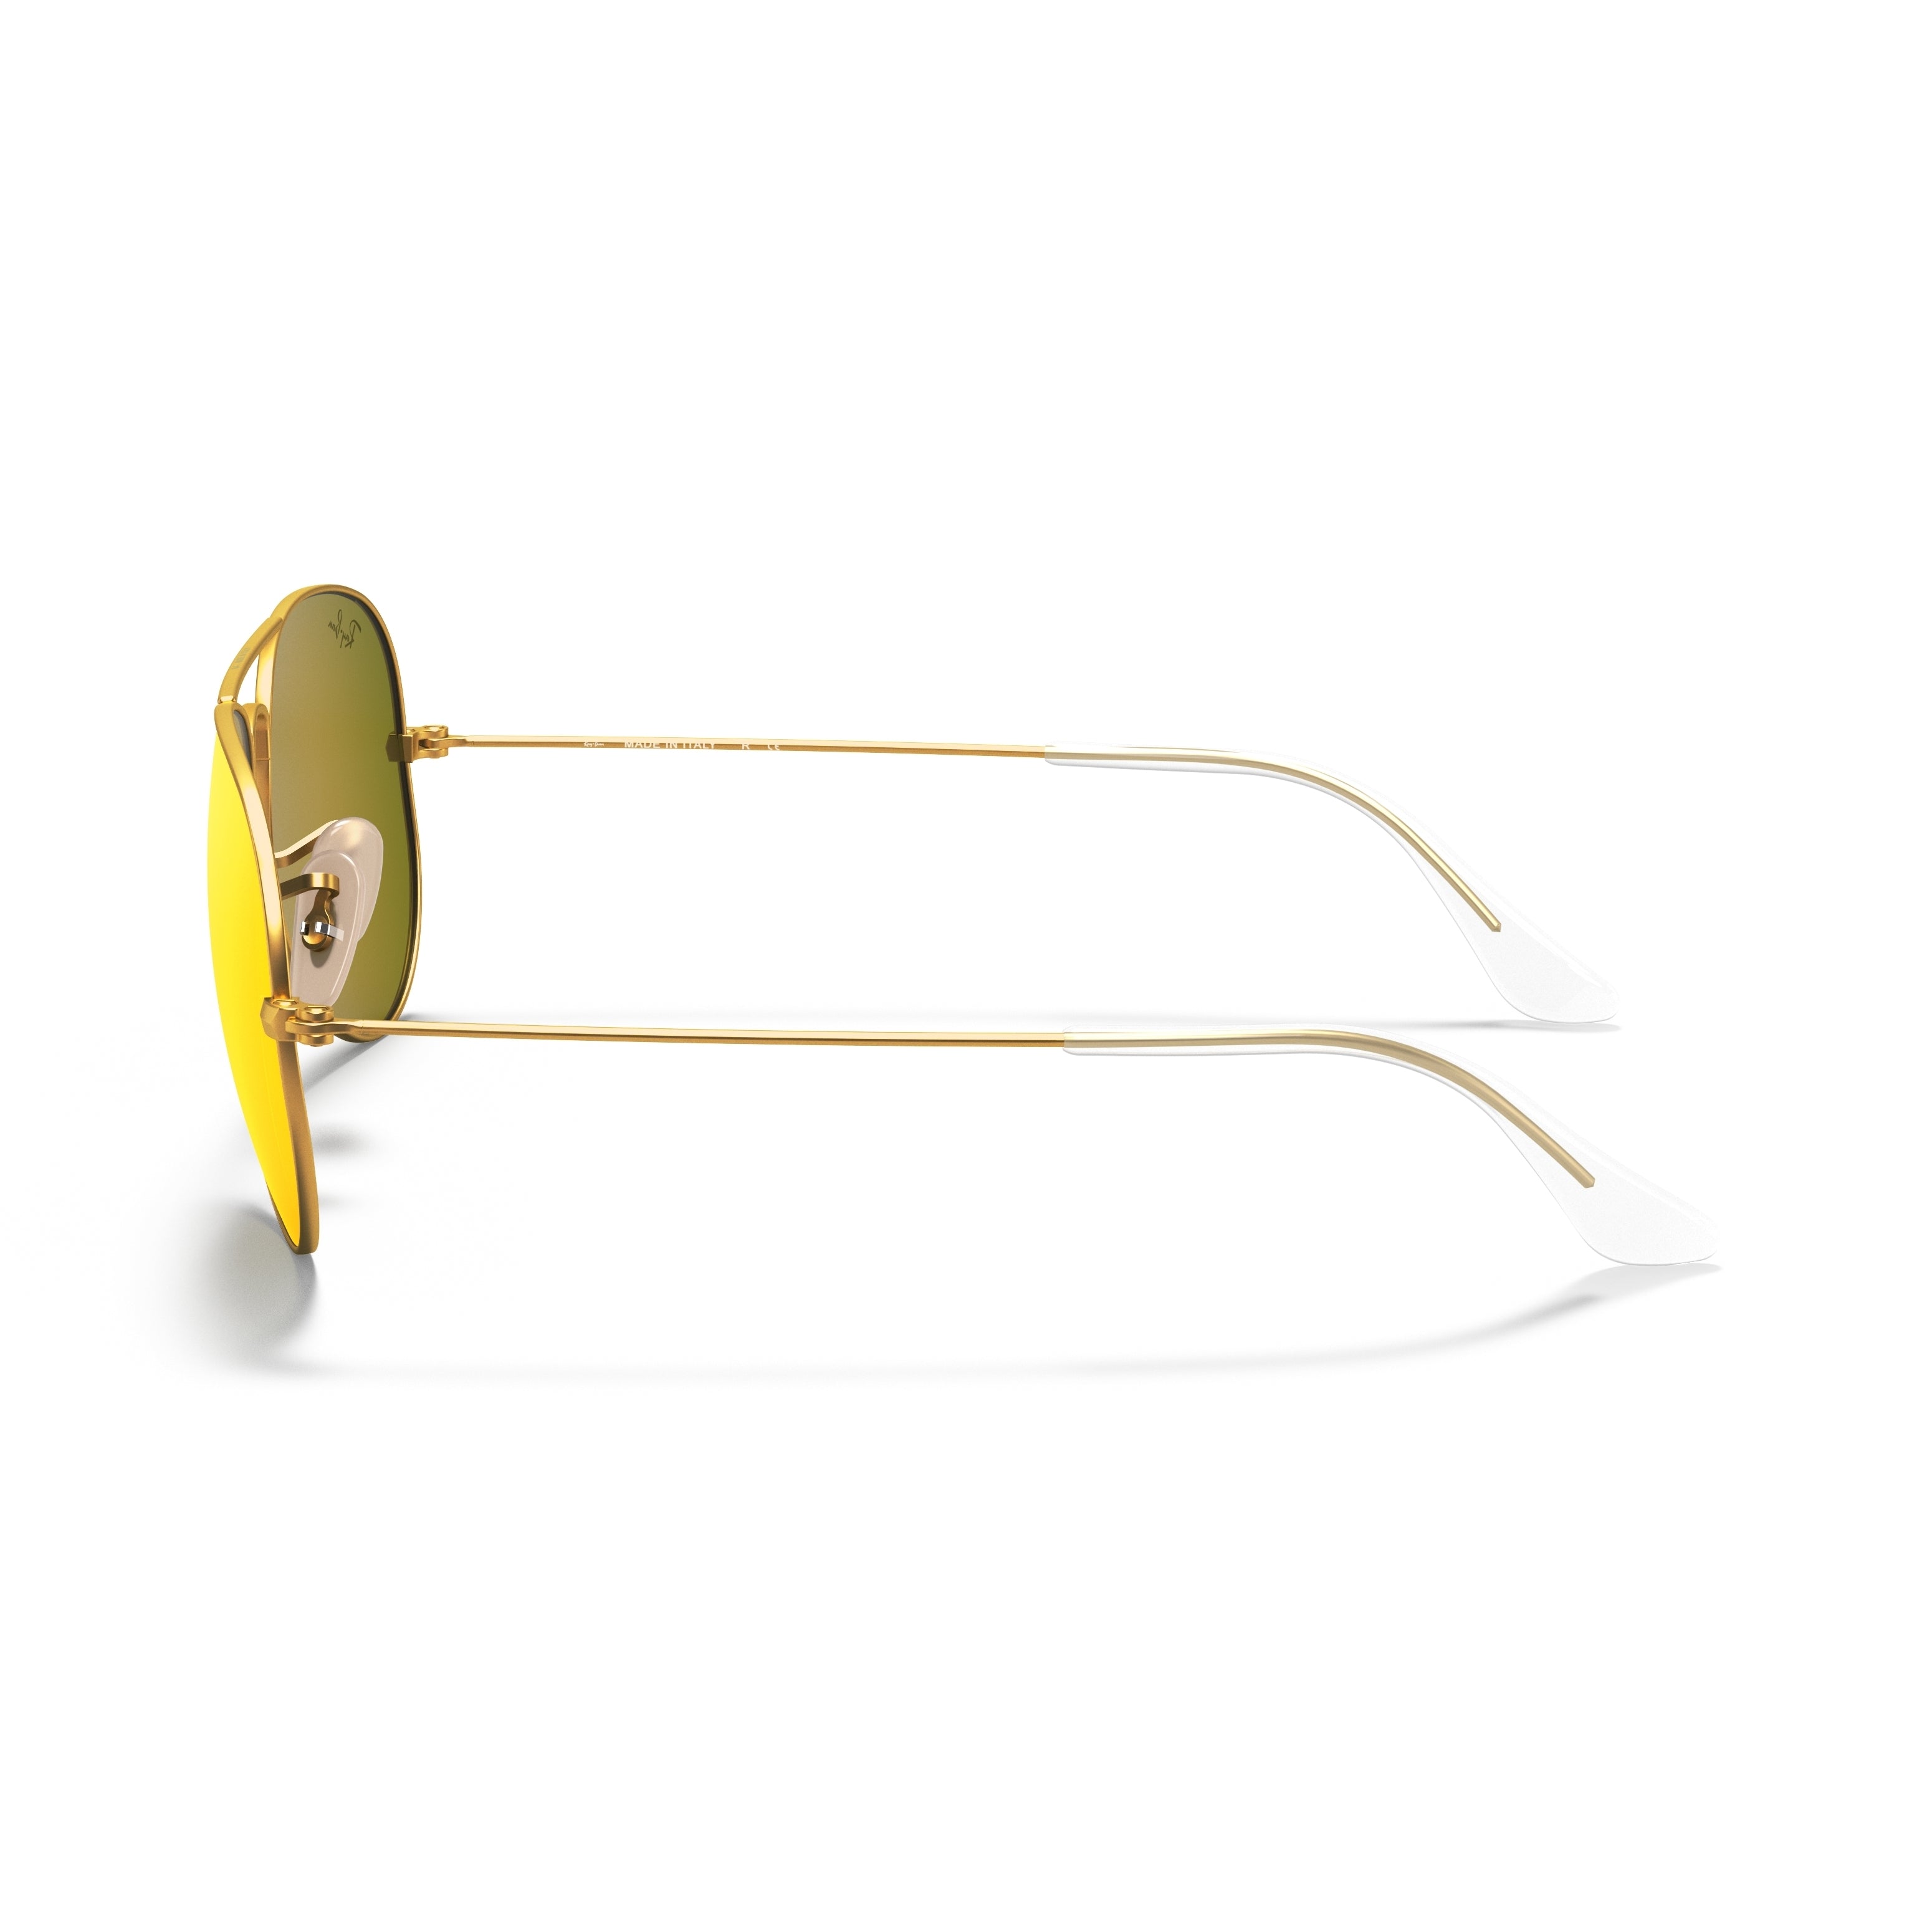 Ray-Ban Ray-Ban Aviator Flash Lenses Orange Flash Pilot Unisex Sunglasses RB3025 112/69 55